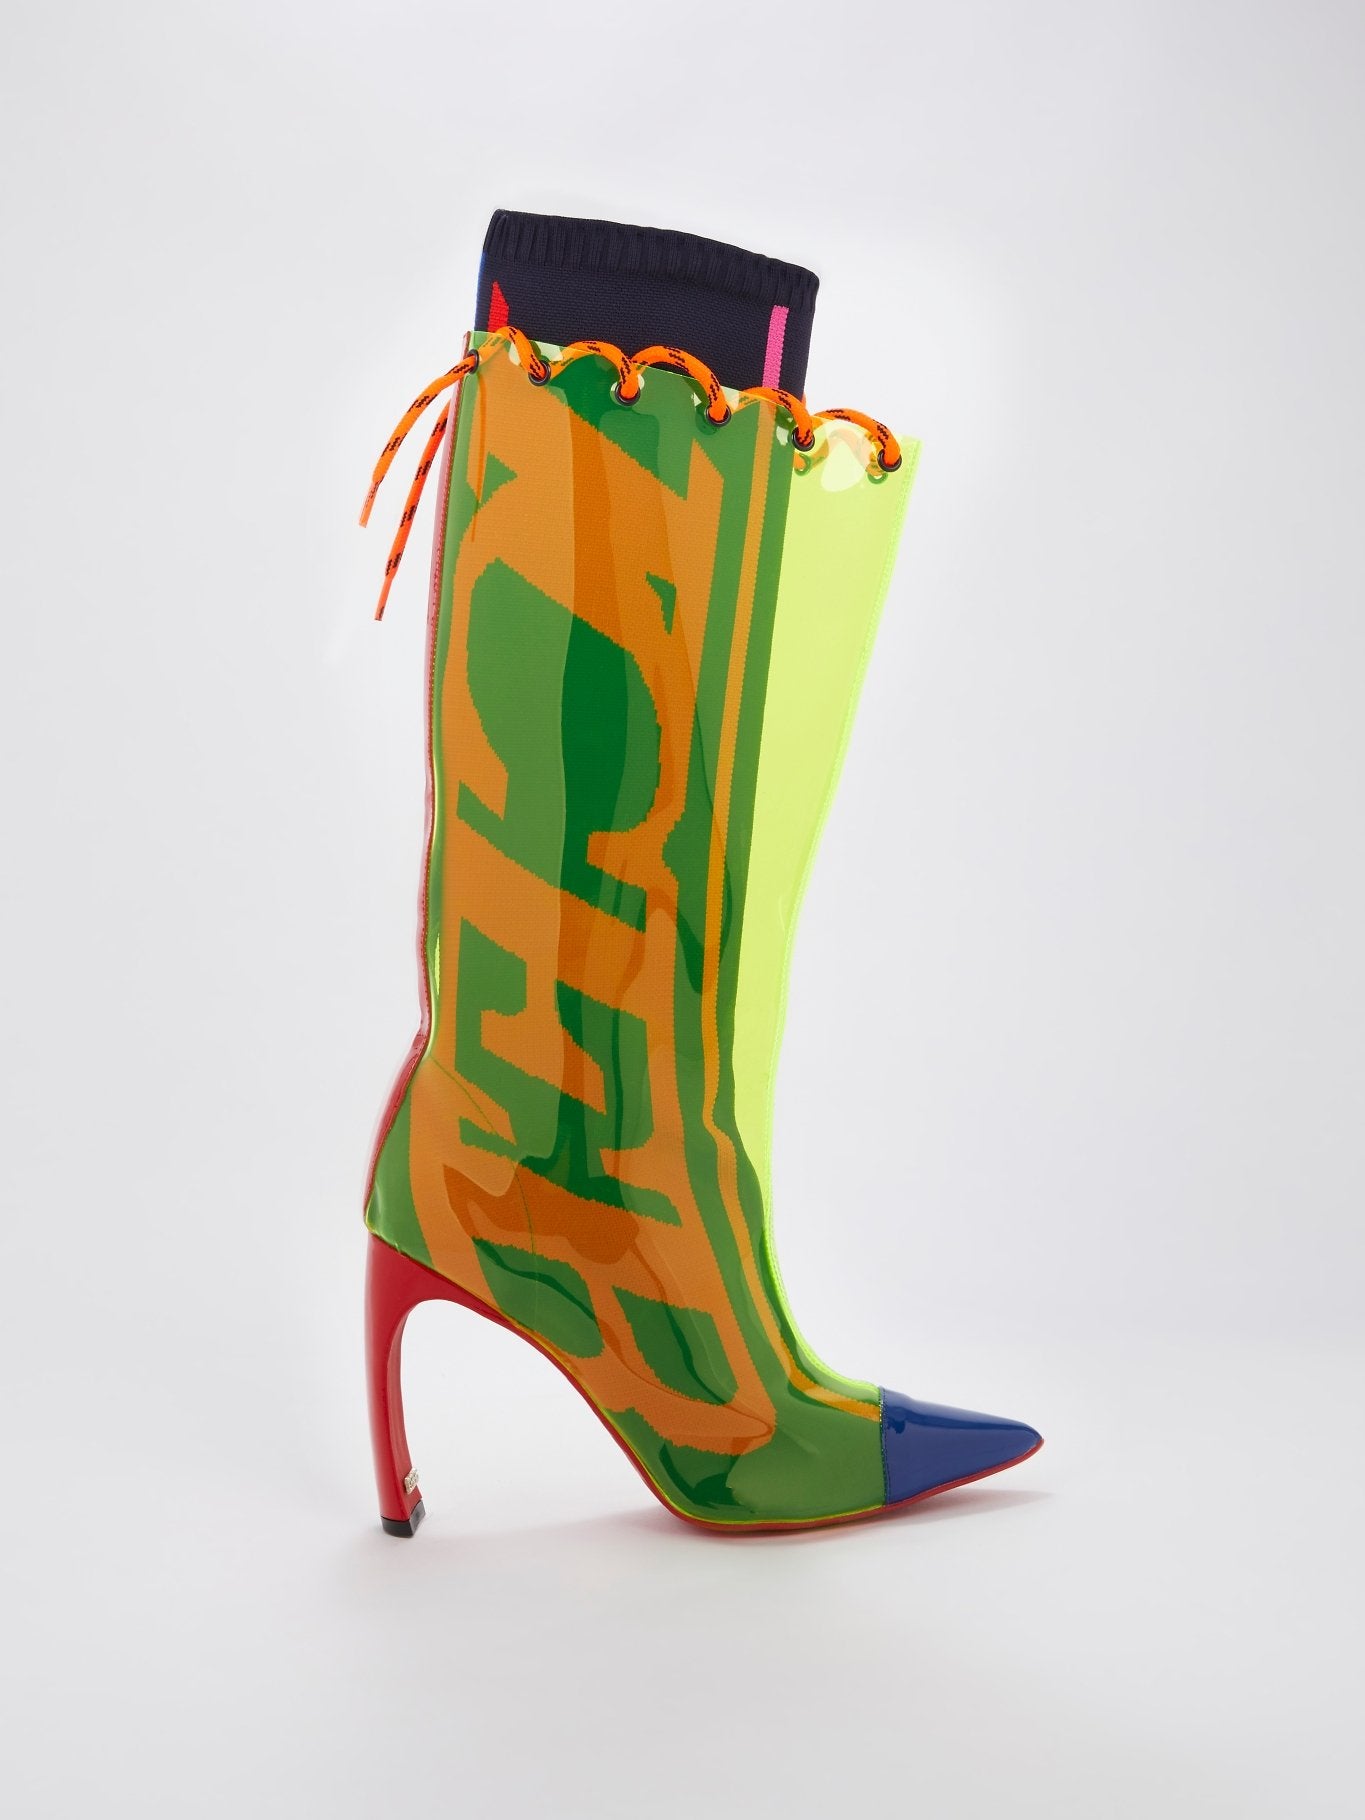 neon green knee high boots